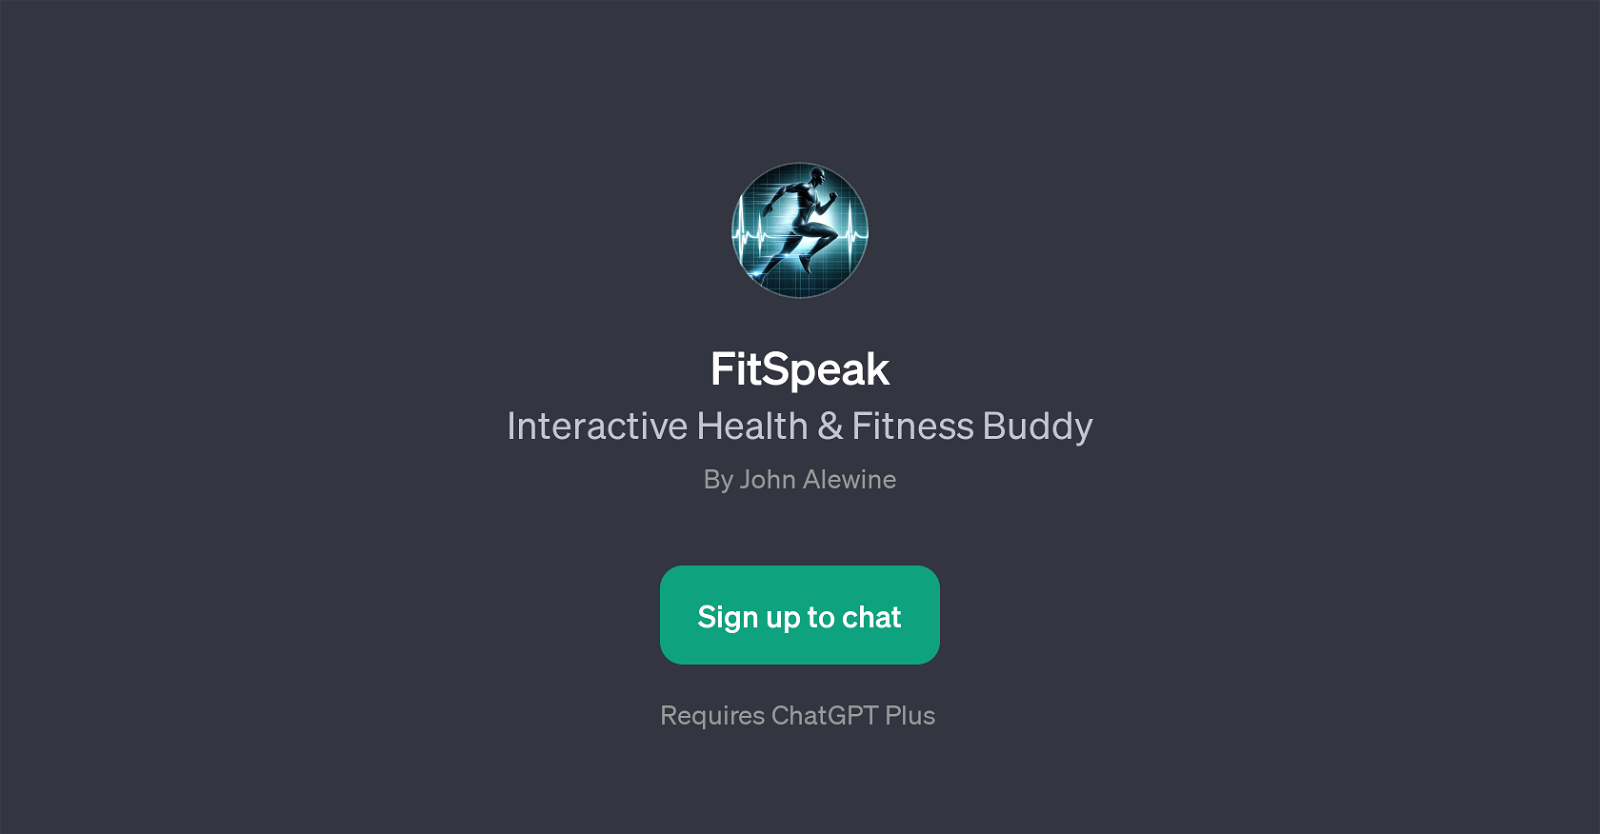 FitSpeak website